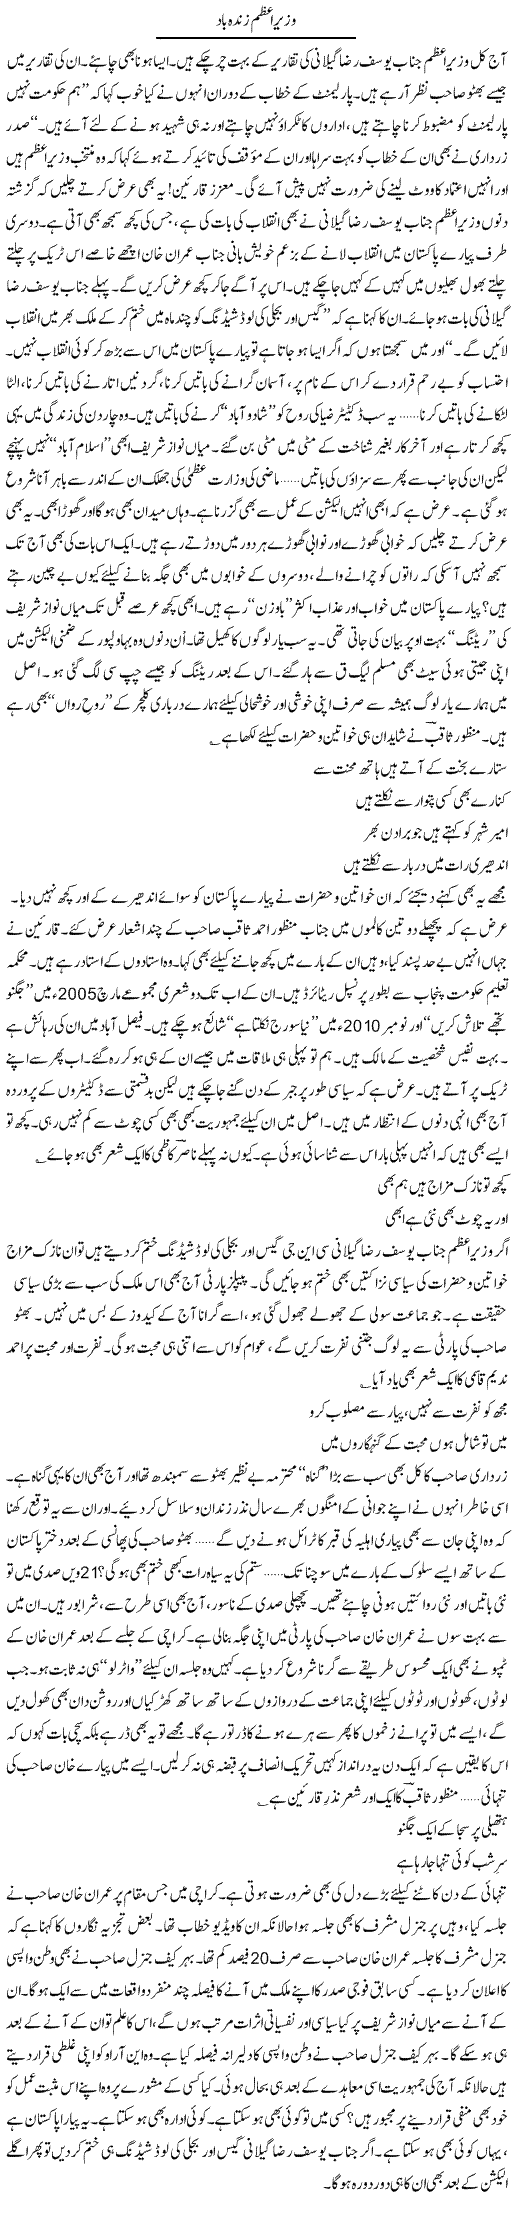 Prime Minister Gilani Express Column Ijaz Khan 15 January 2012